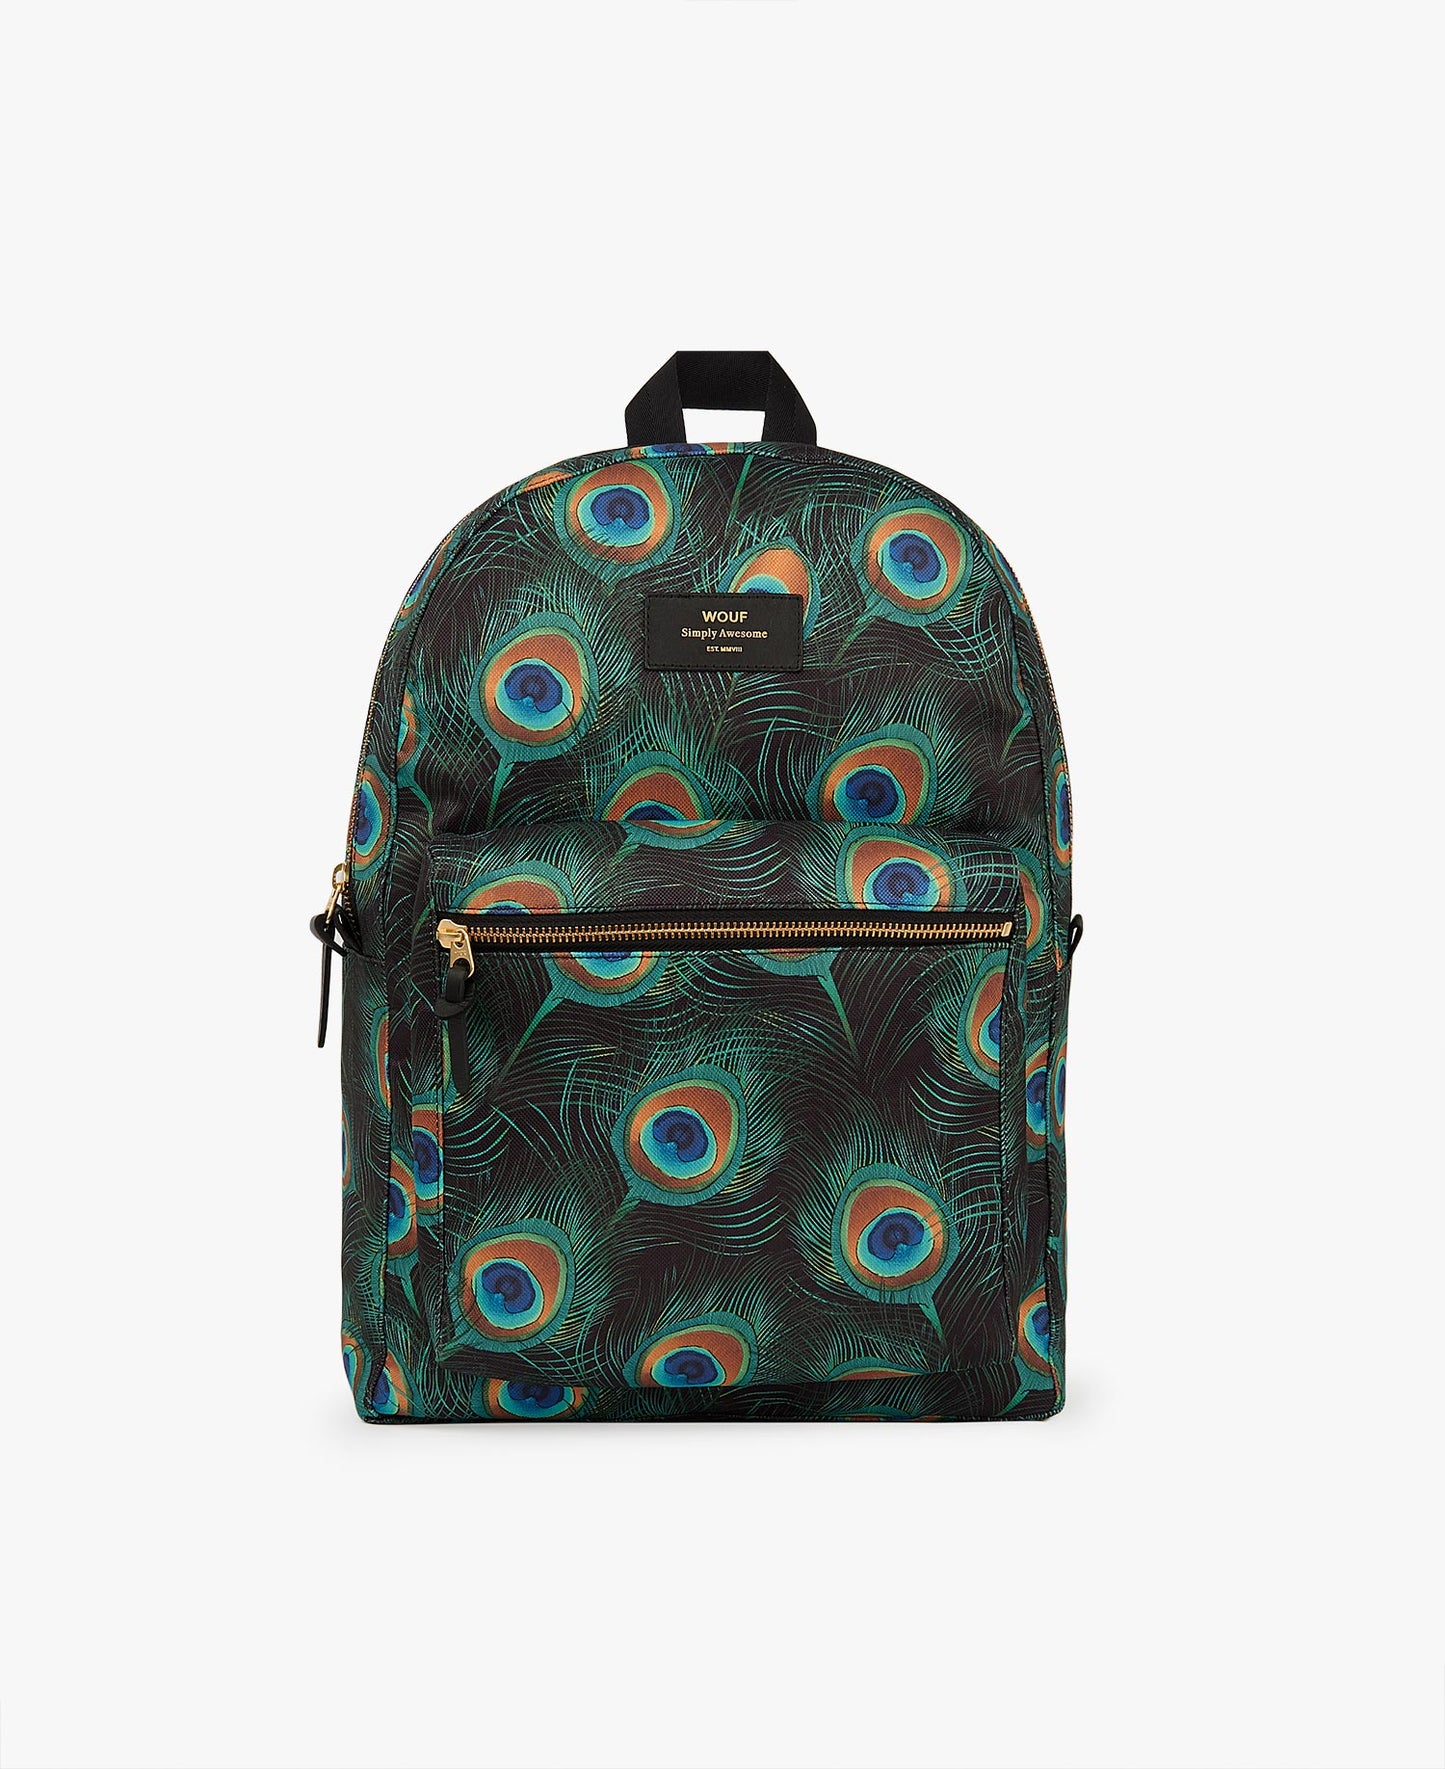 Backpack - Peacock